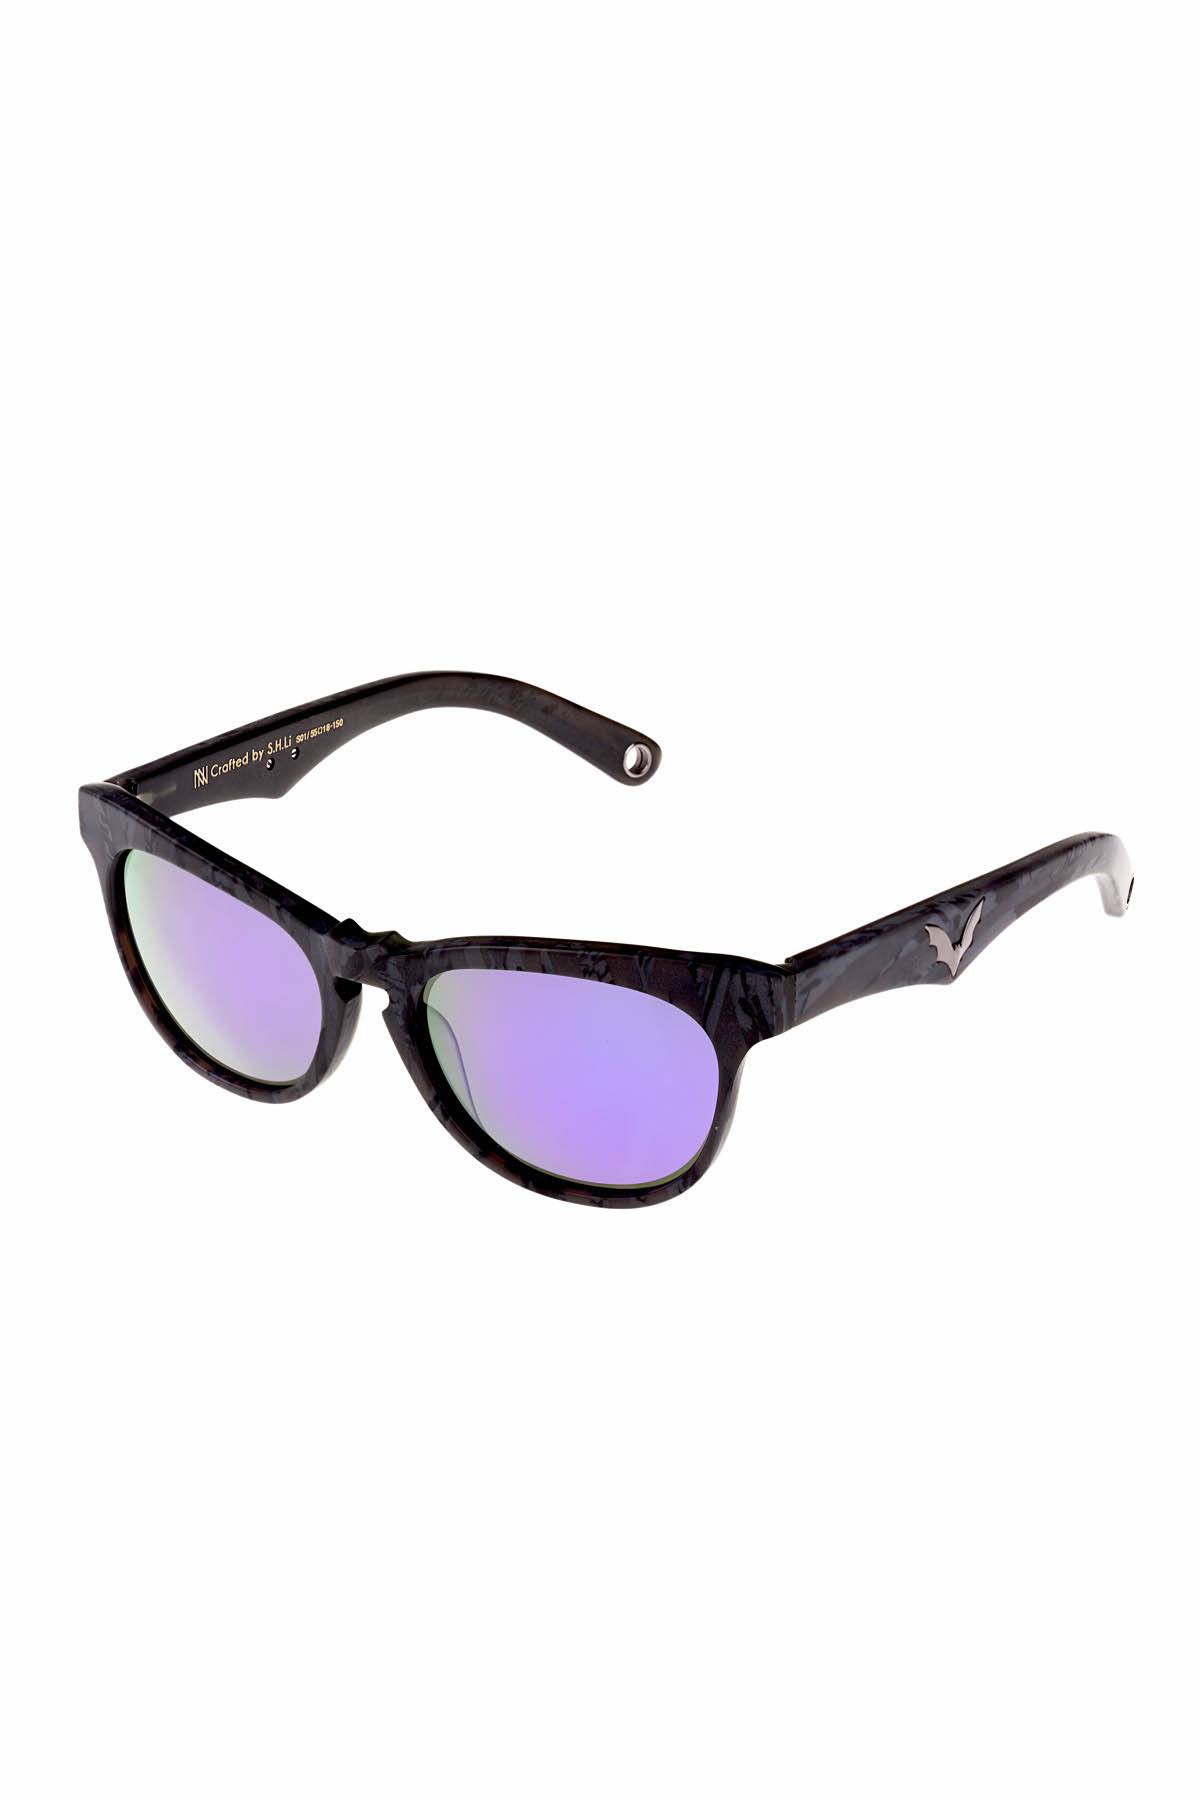 Neo-Ne Stone Black Swing Bat Sunglasses